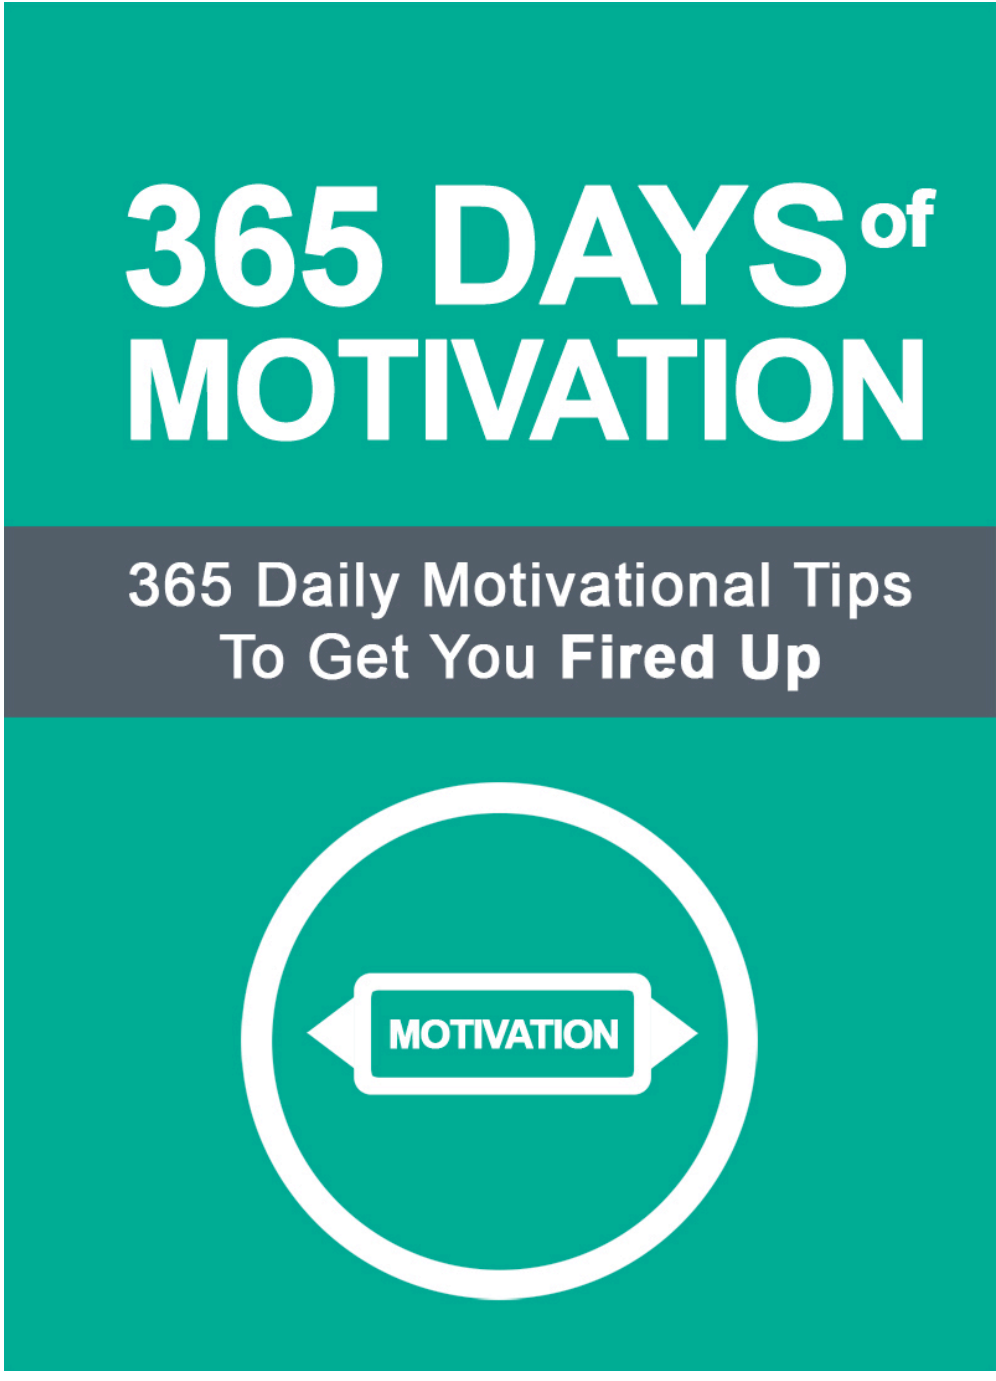 365 Days to Motivation